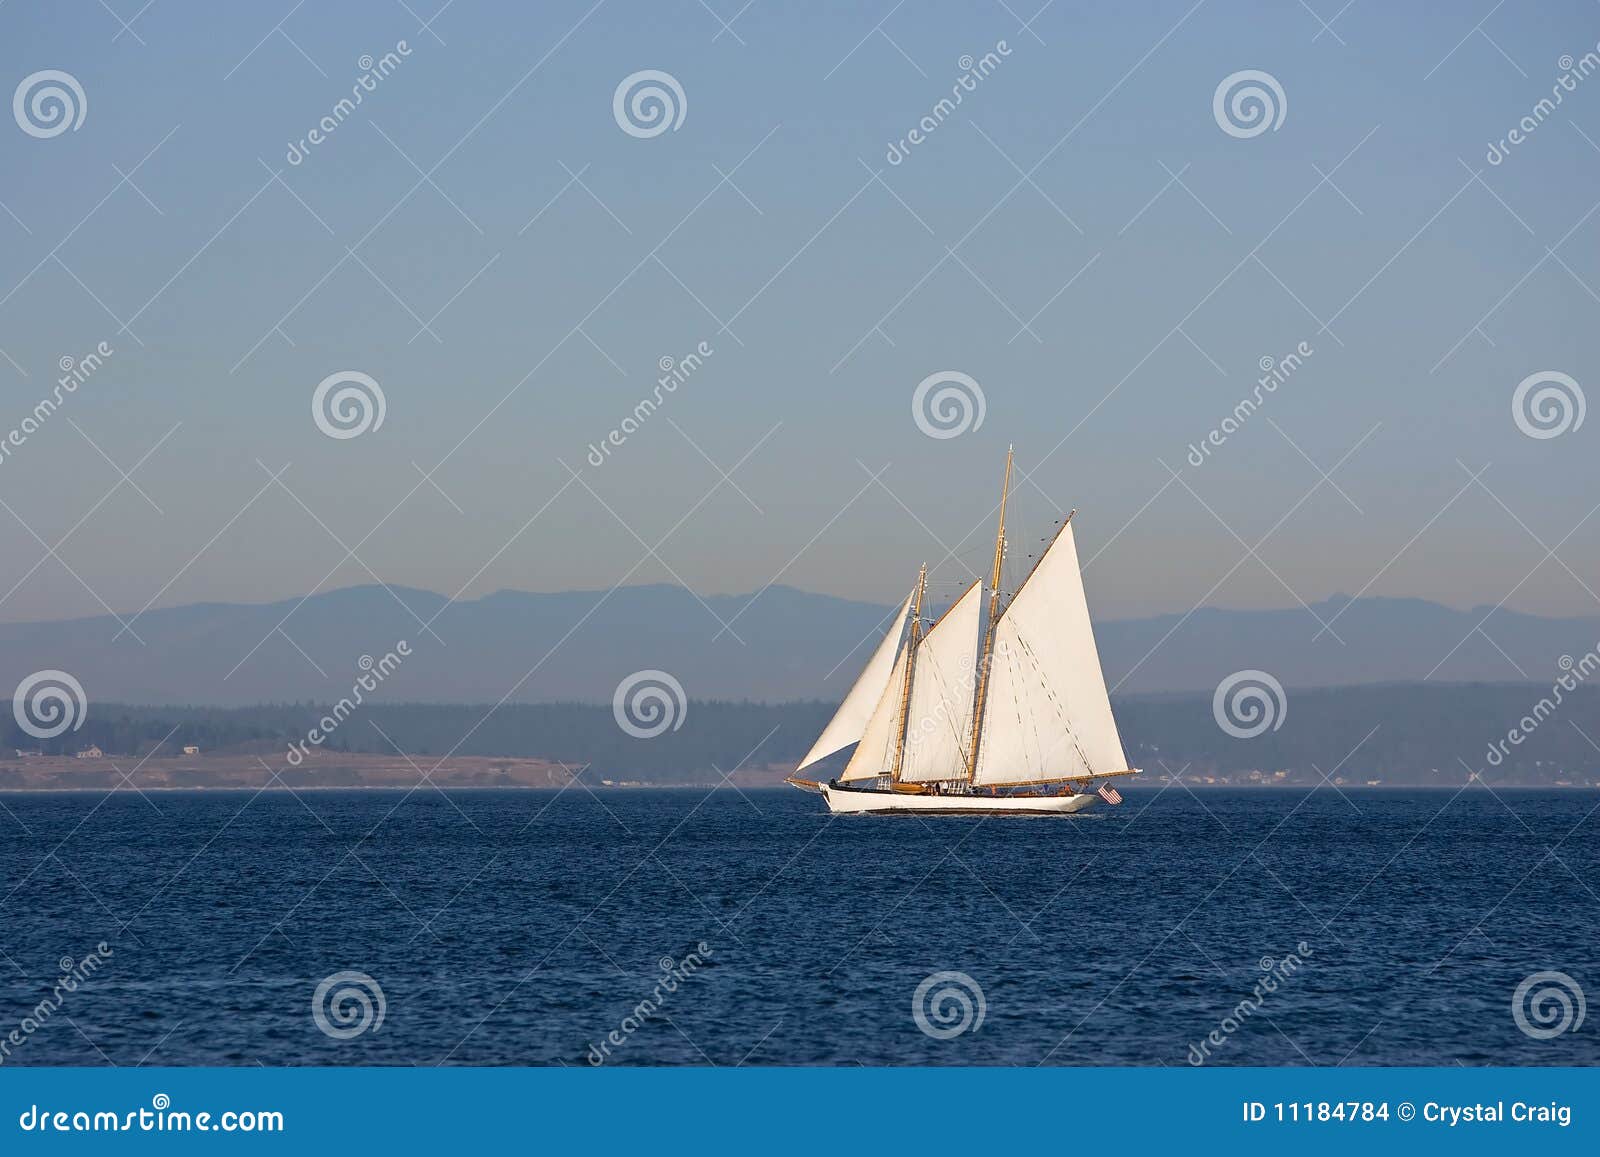 sailing in puget sound